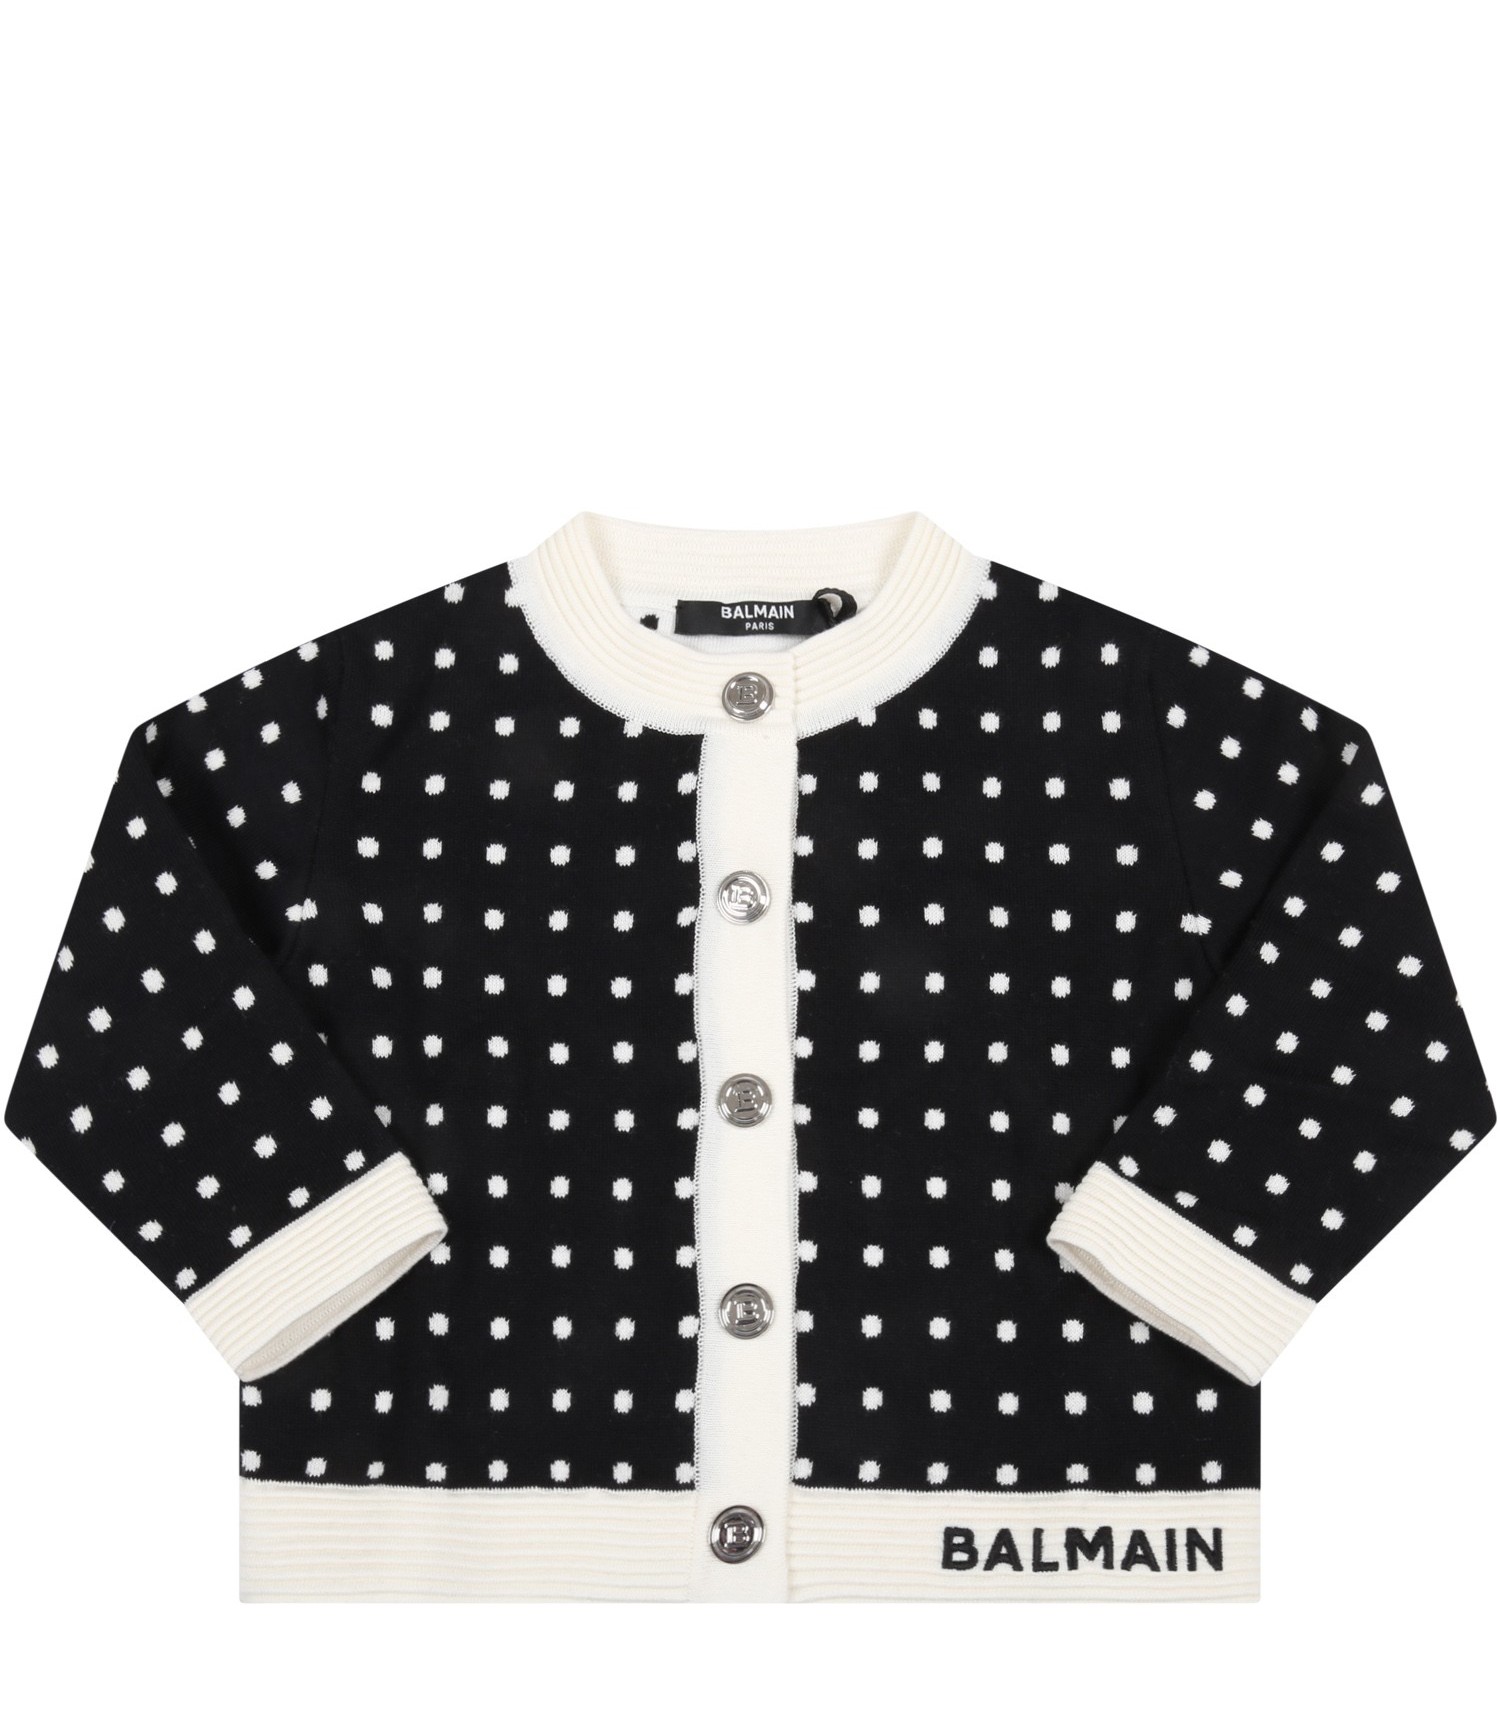 Balmain Kids Black cardigan for baby kids with polka-dots